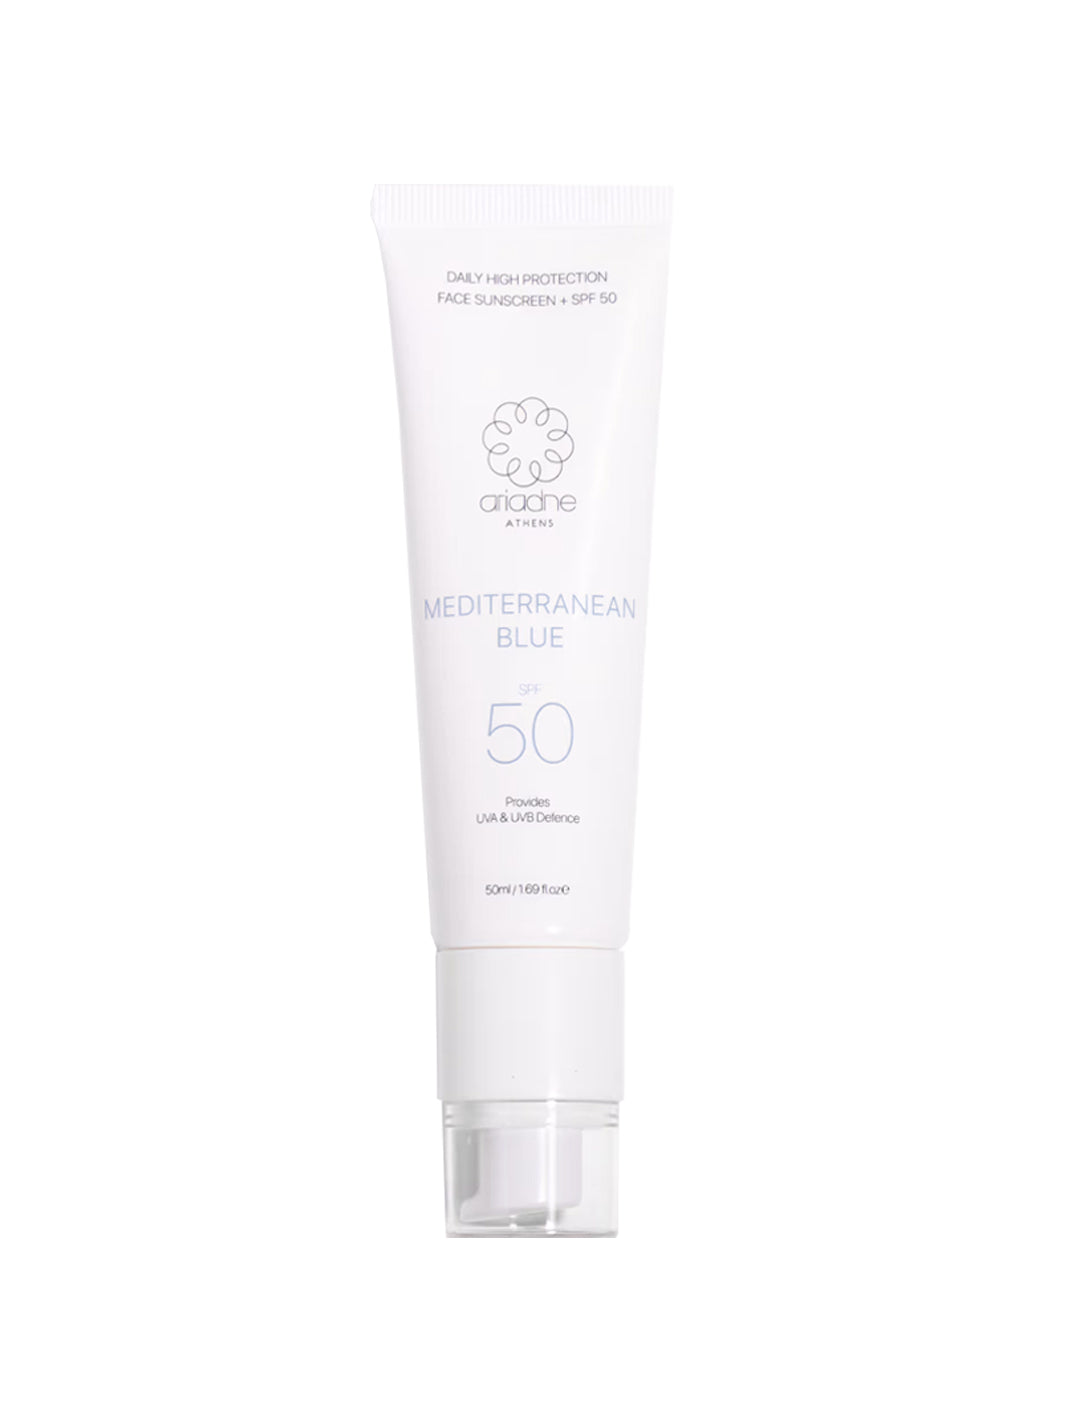 Mediterranean Blue Daily Face Sunscreen SPF50